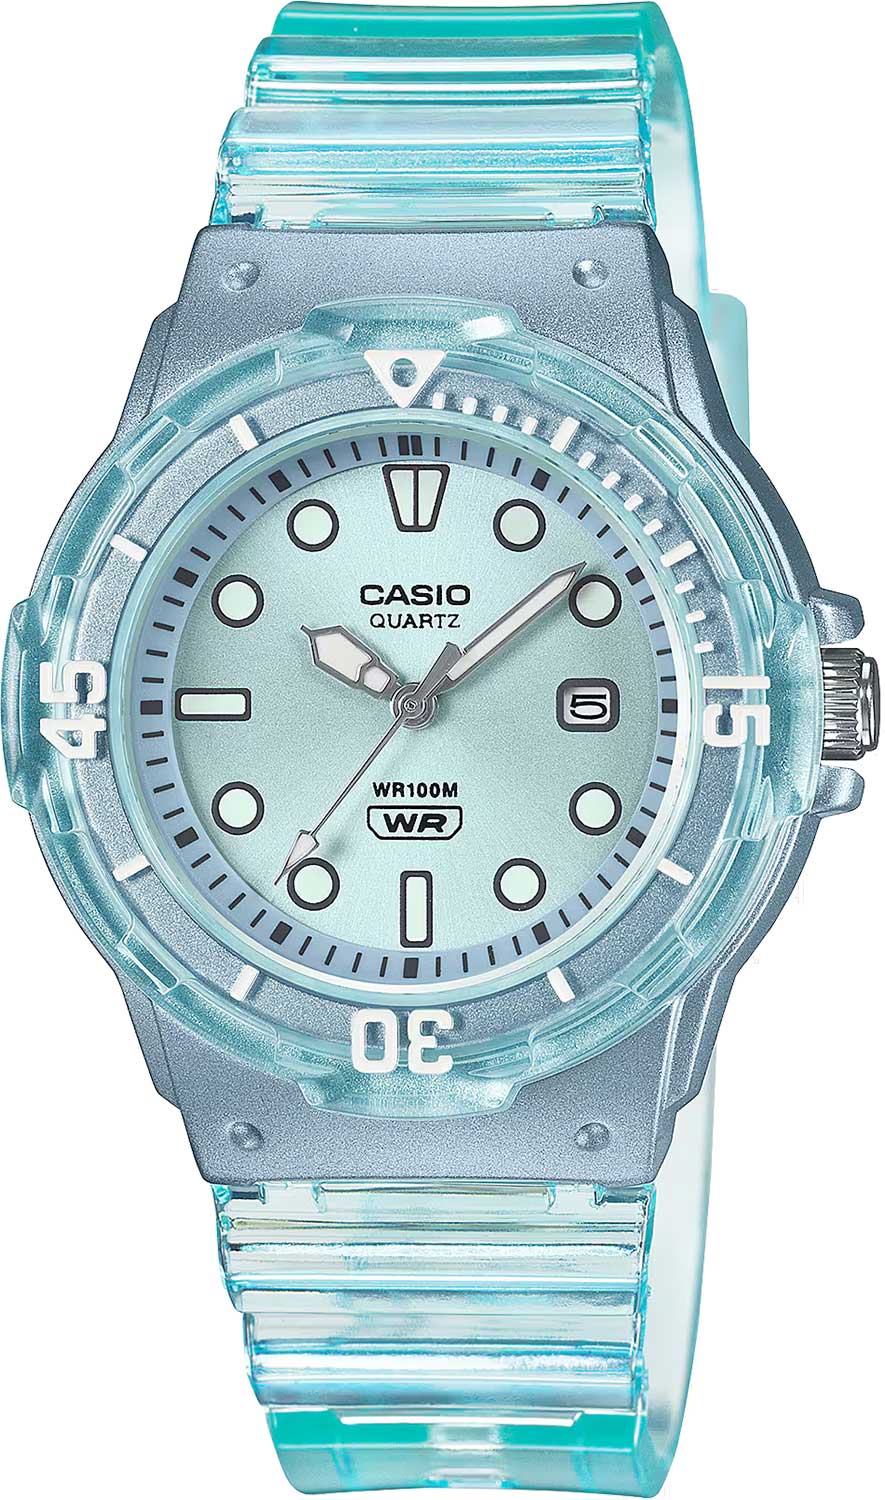 Casio LRW-200HS-2E